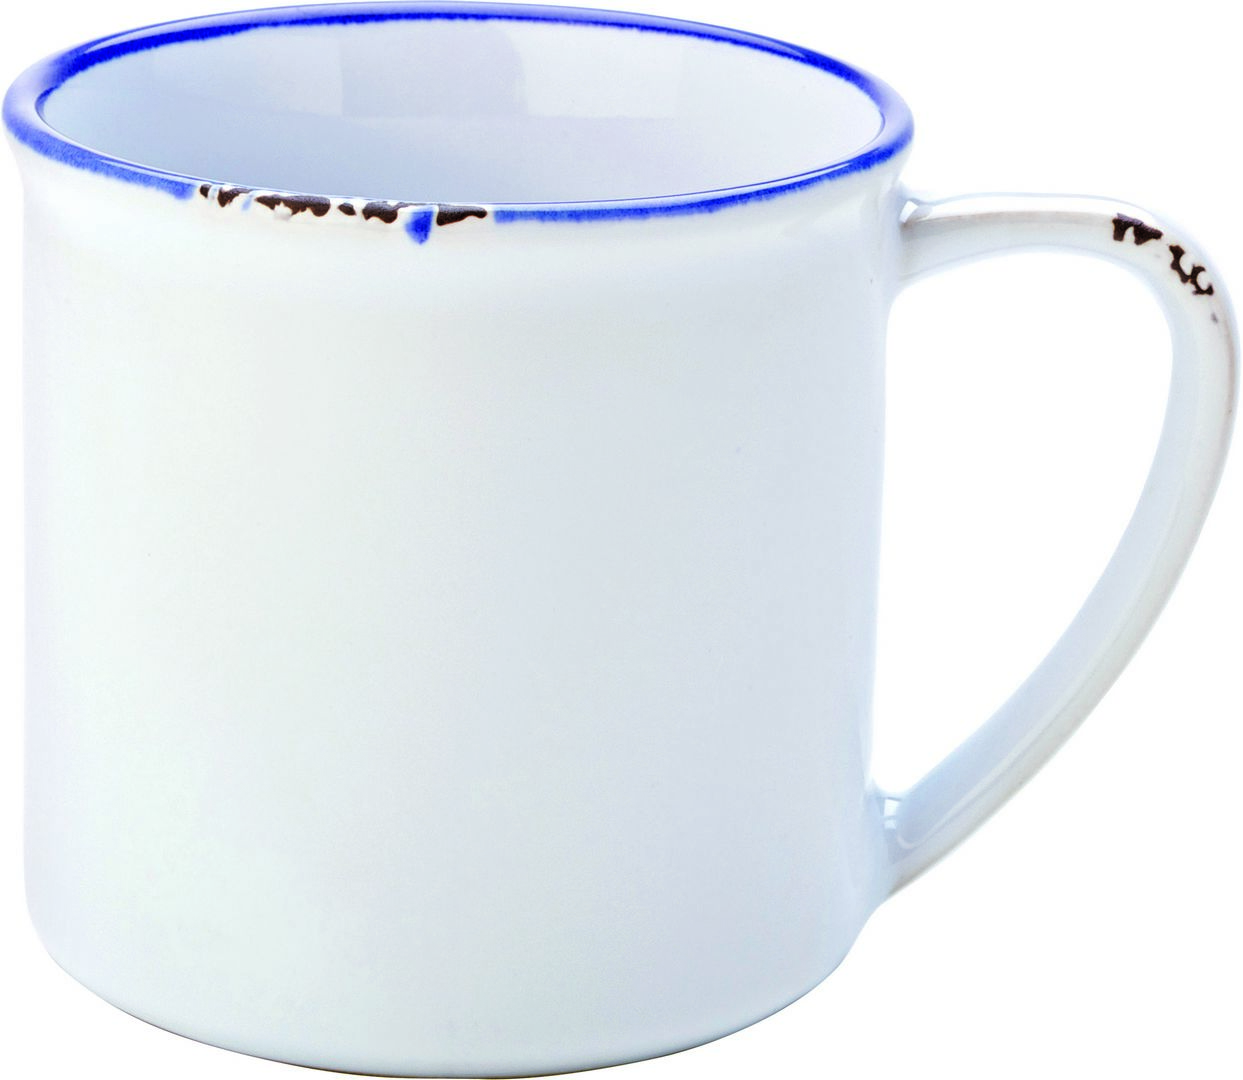 Avebury Blue Mug 13.5oz (38cl) - CT6008-000000-B01012 (Pack of 12)